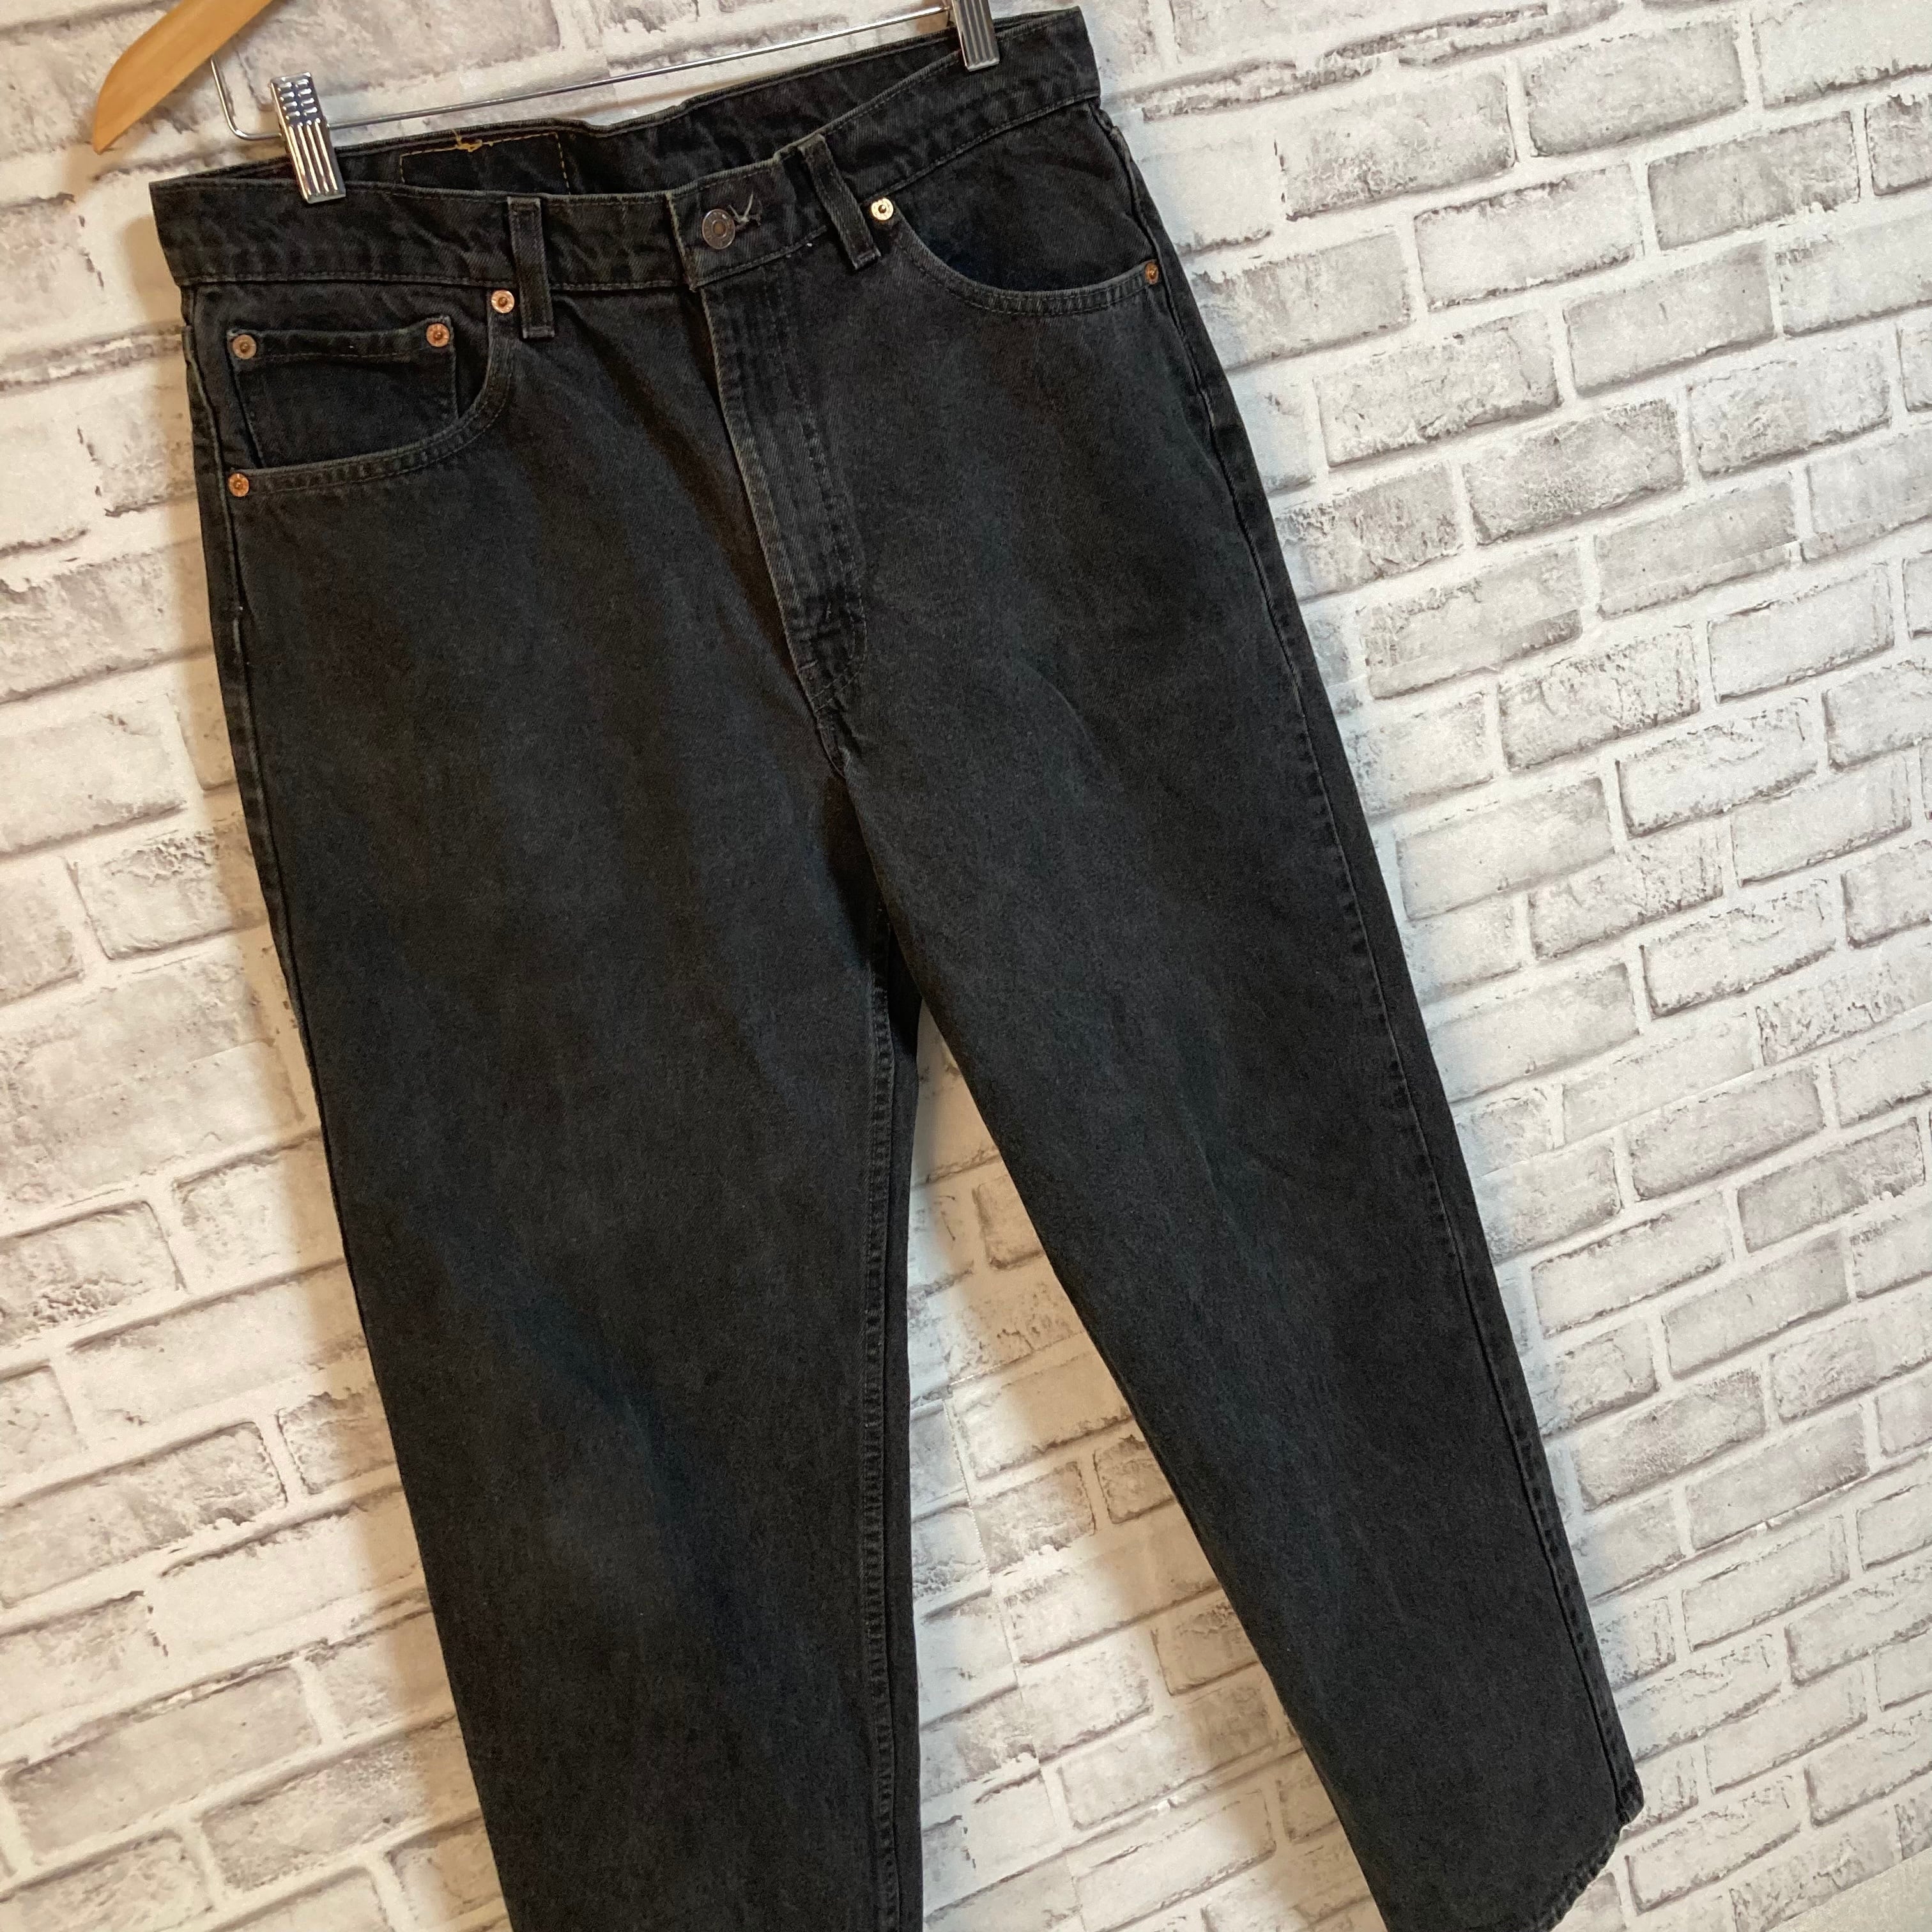 【Levi’s 550】W36×L32 Made in USA 90s Denim Jeans リーバイス 550 USA製 ブラックデニム ジーンズ  ジーパン リラックスフィット テーパード アメリカ USA 古着